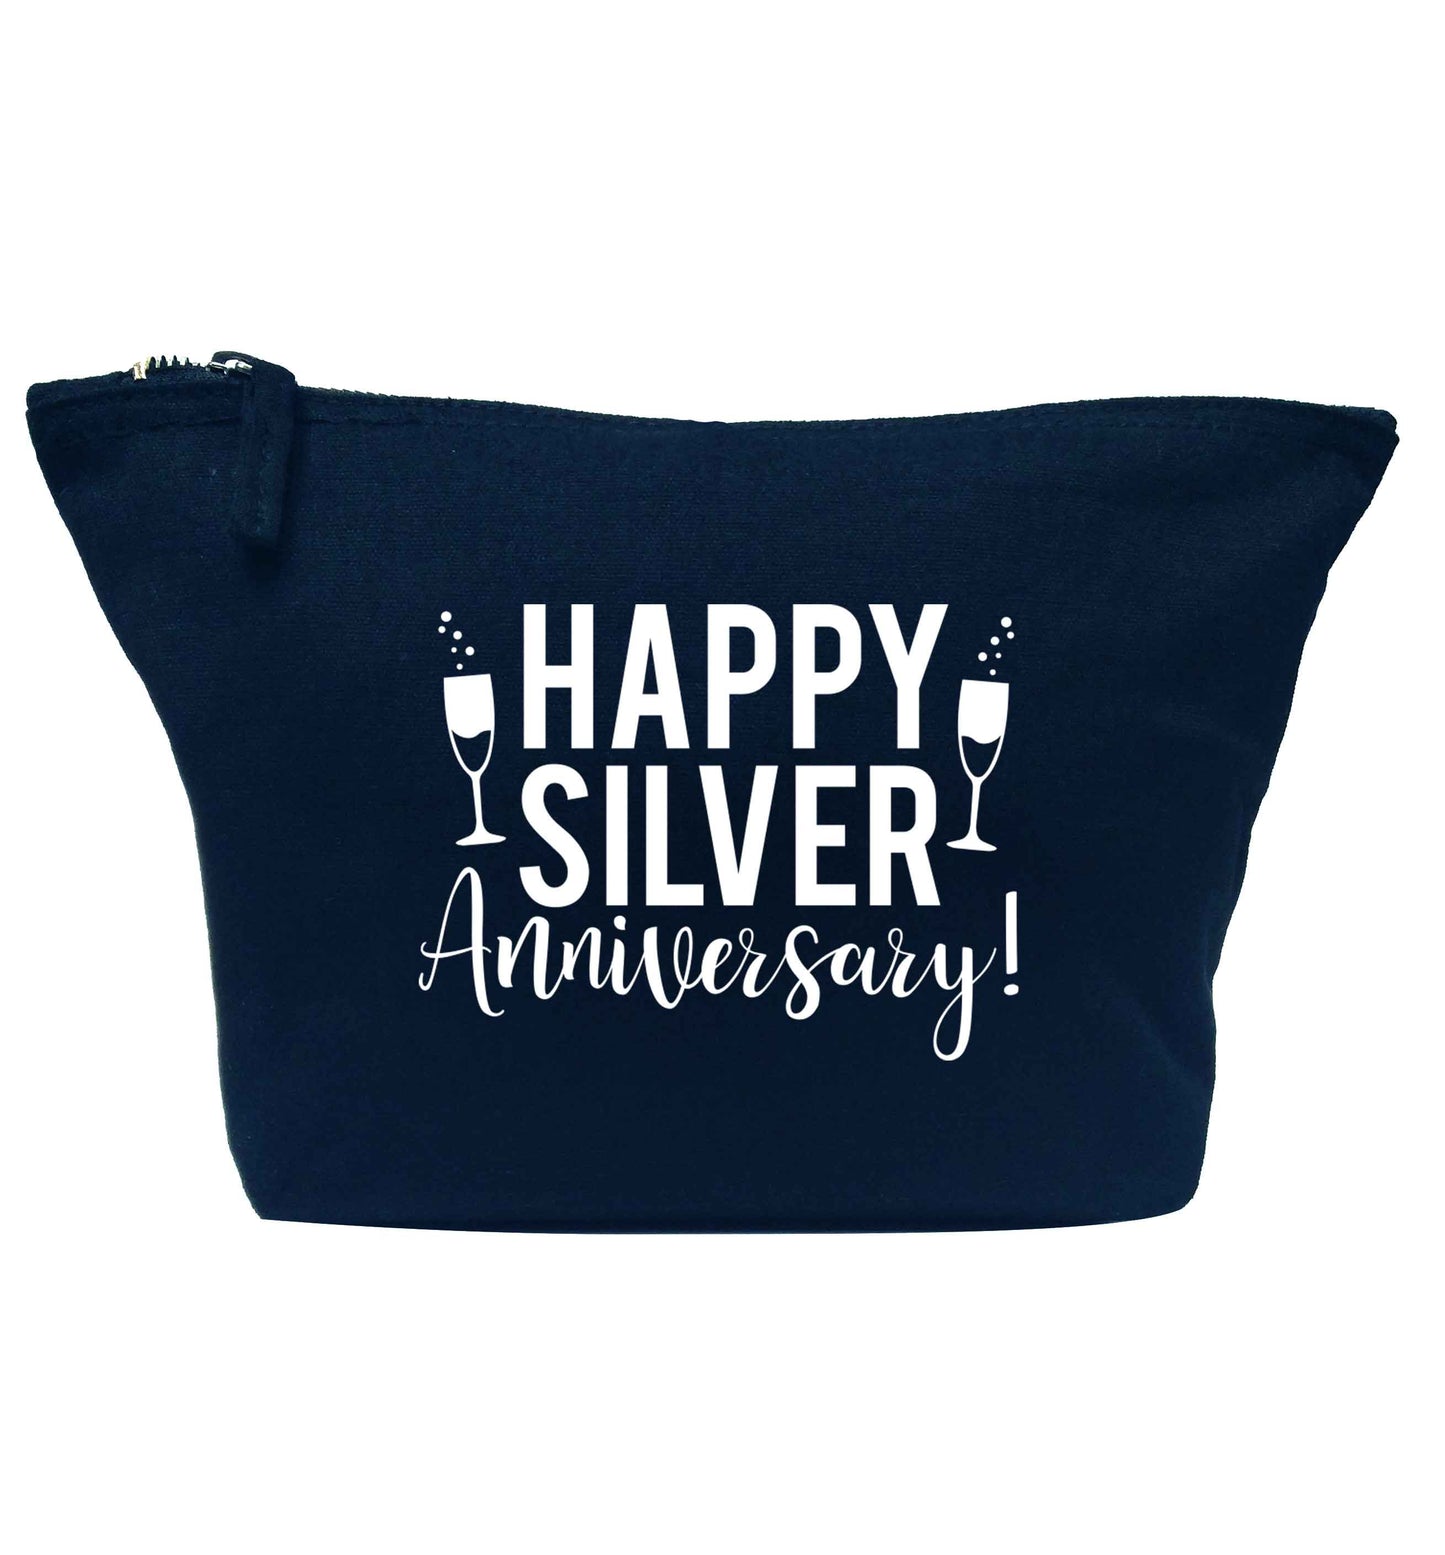 Happy silver anniversary! navy makeup bag